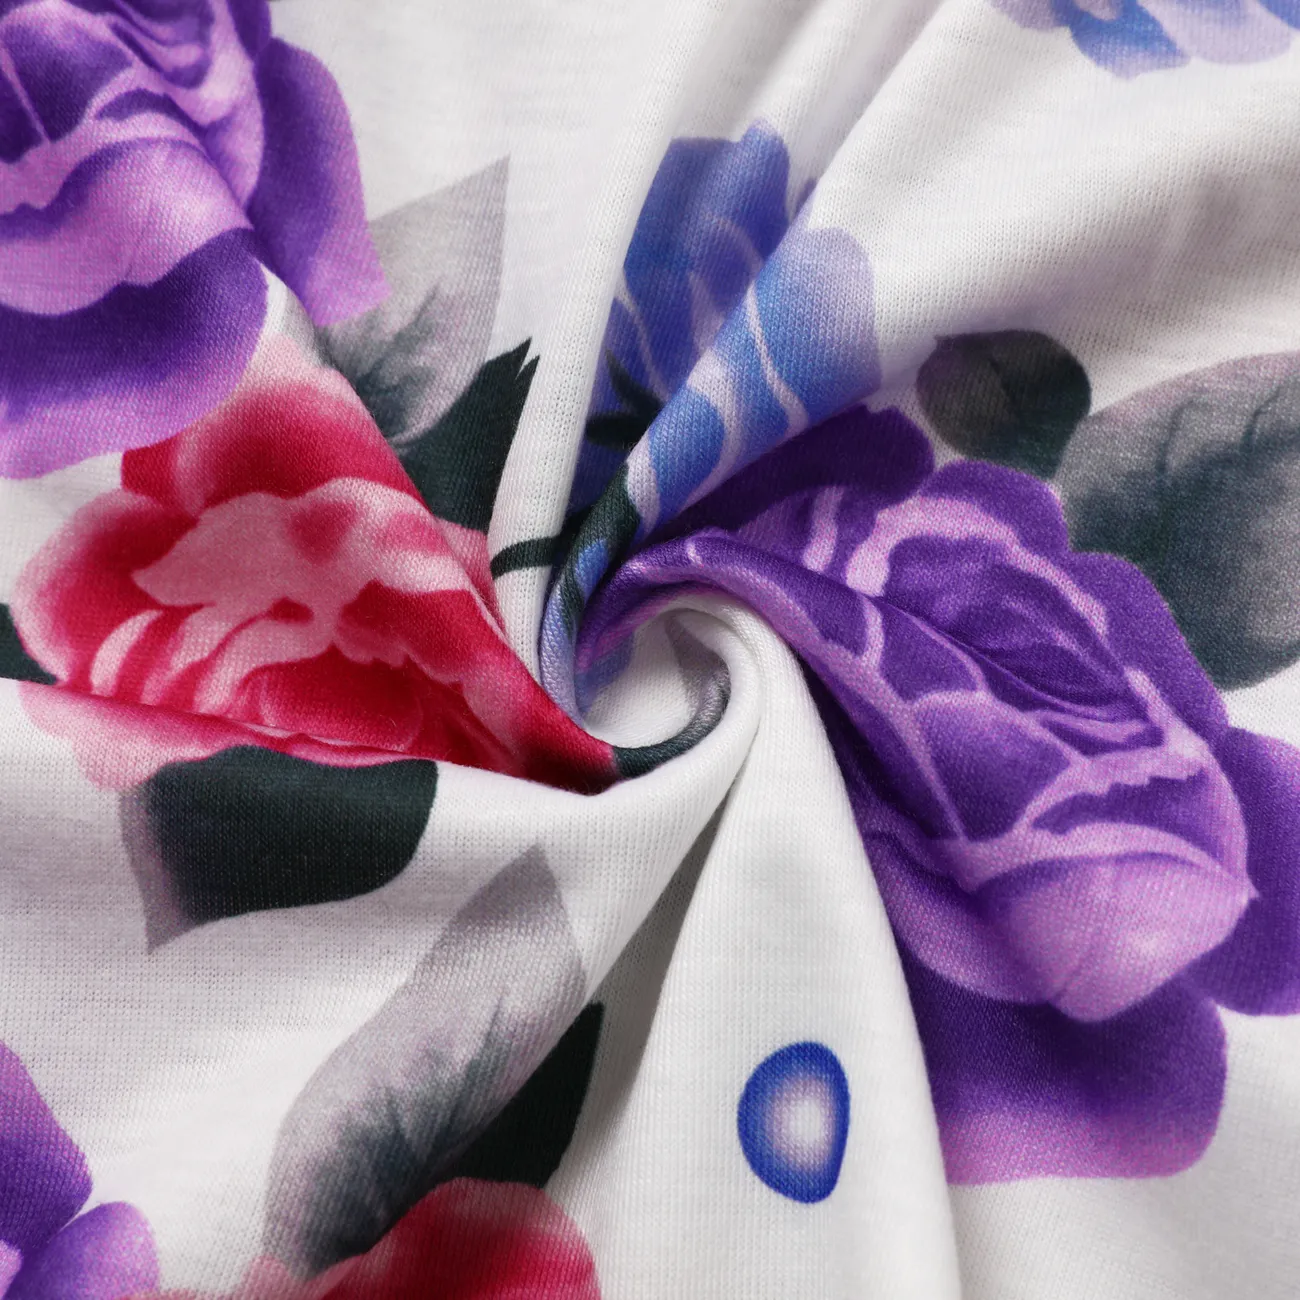 2pcs Kid Girl Floral Print Sleeveless Dress and Long-sleeve Purple Bowknot Design Cardigan Set Purple big image 1